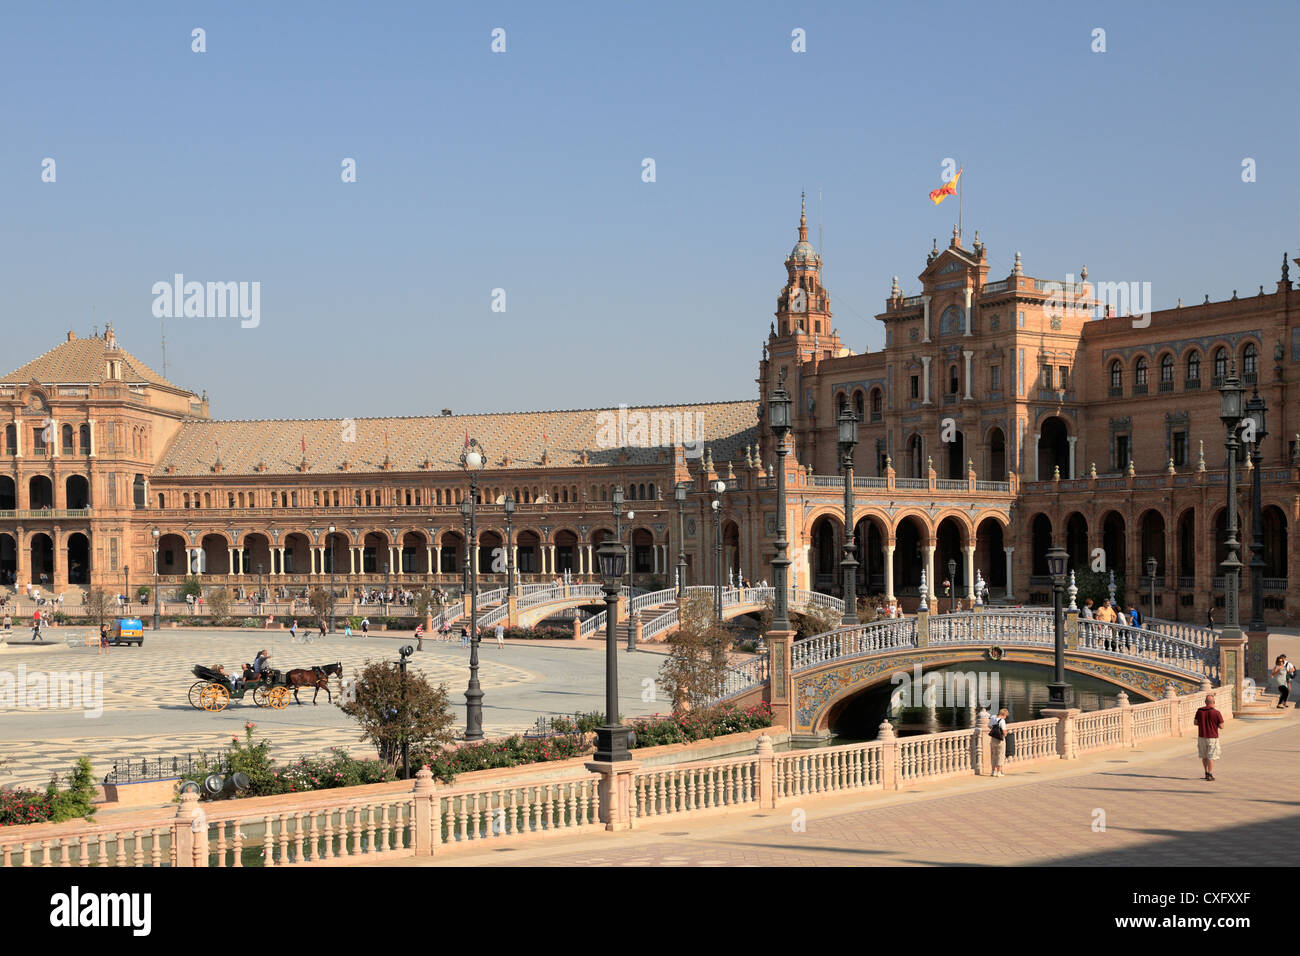 Plaza de Espana Seville Spain Government buildings overlooking a popular tourist visit. Stock Photo